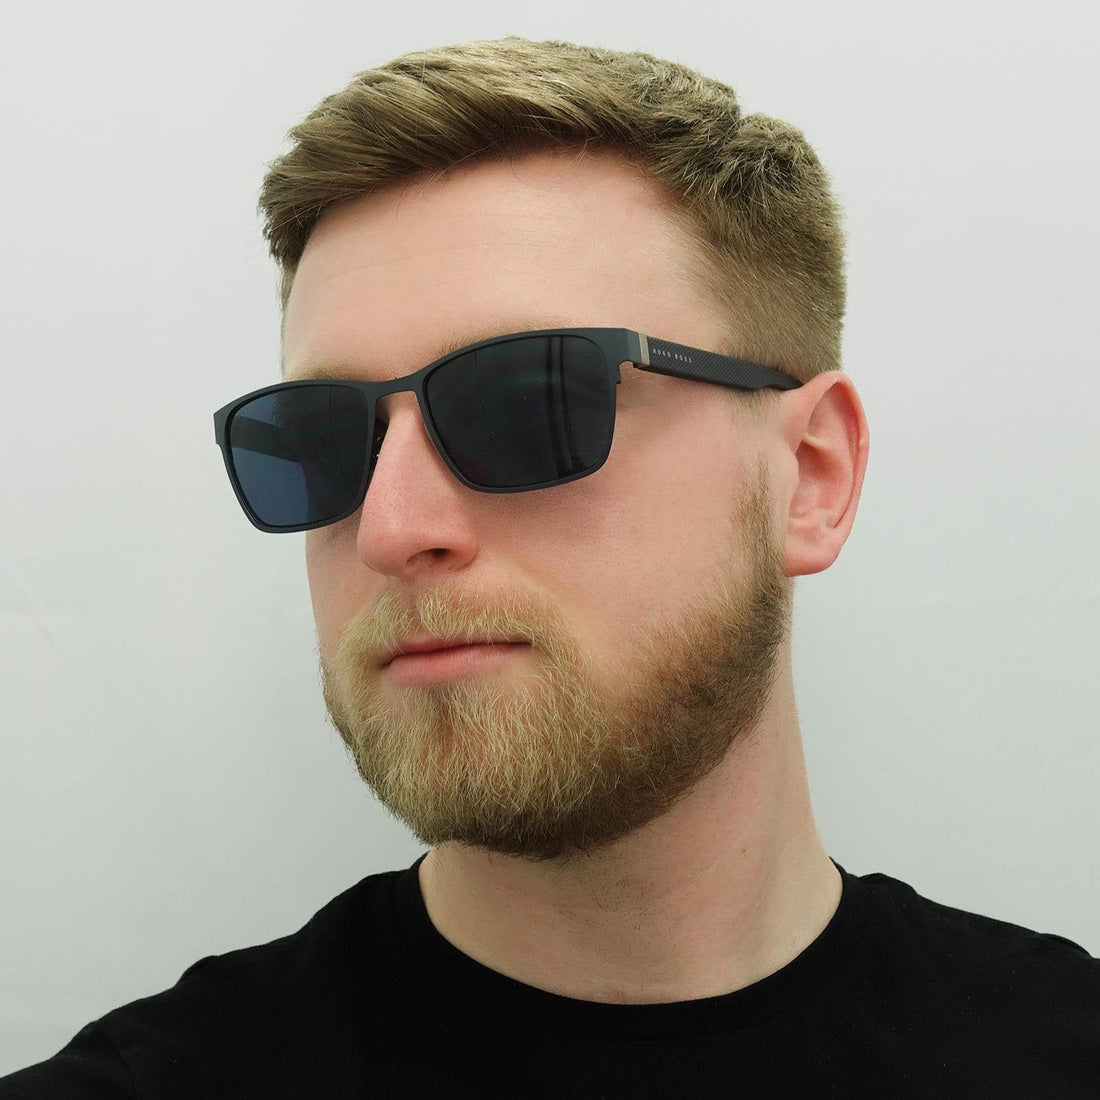 Hugo Boss 1038/S Sunglasses